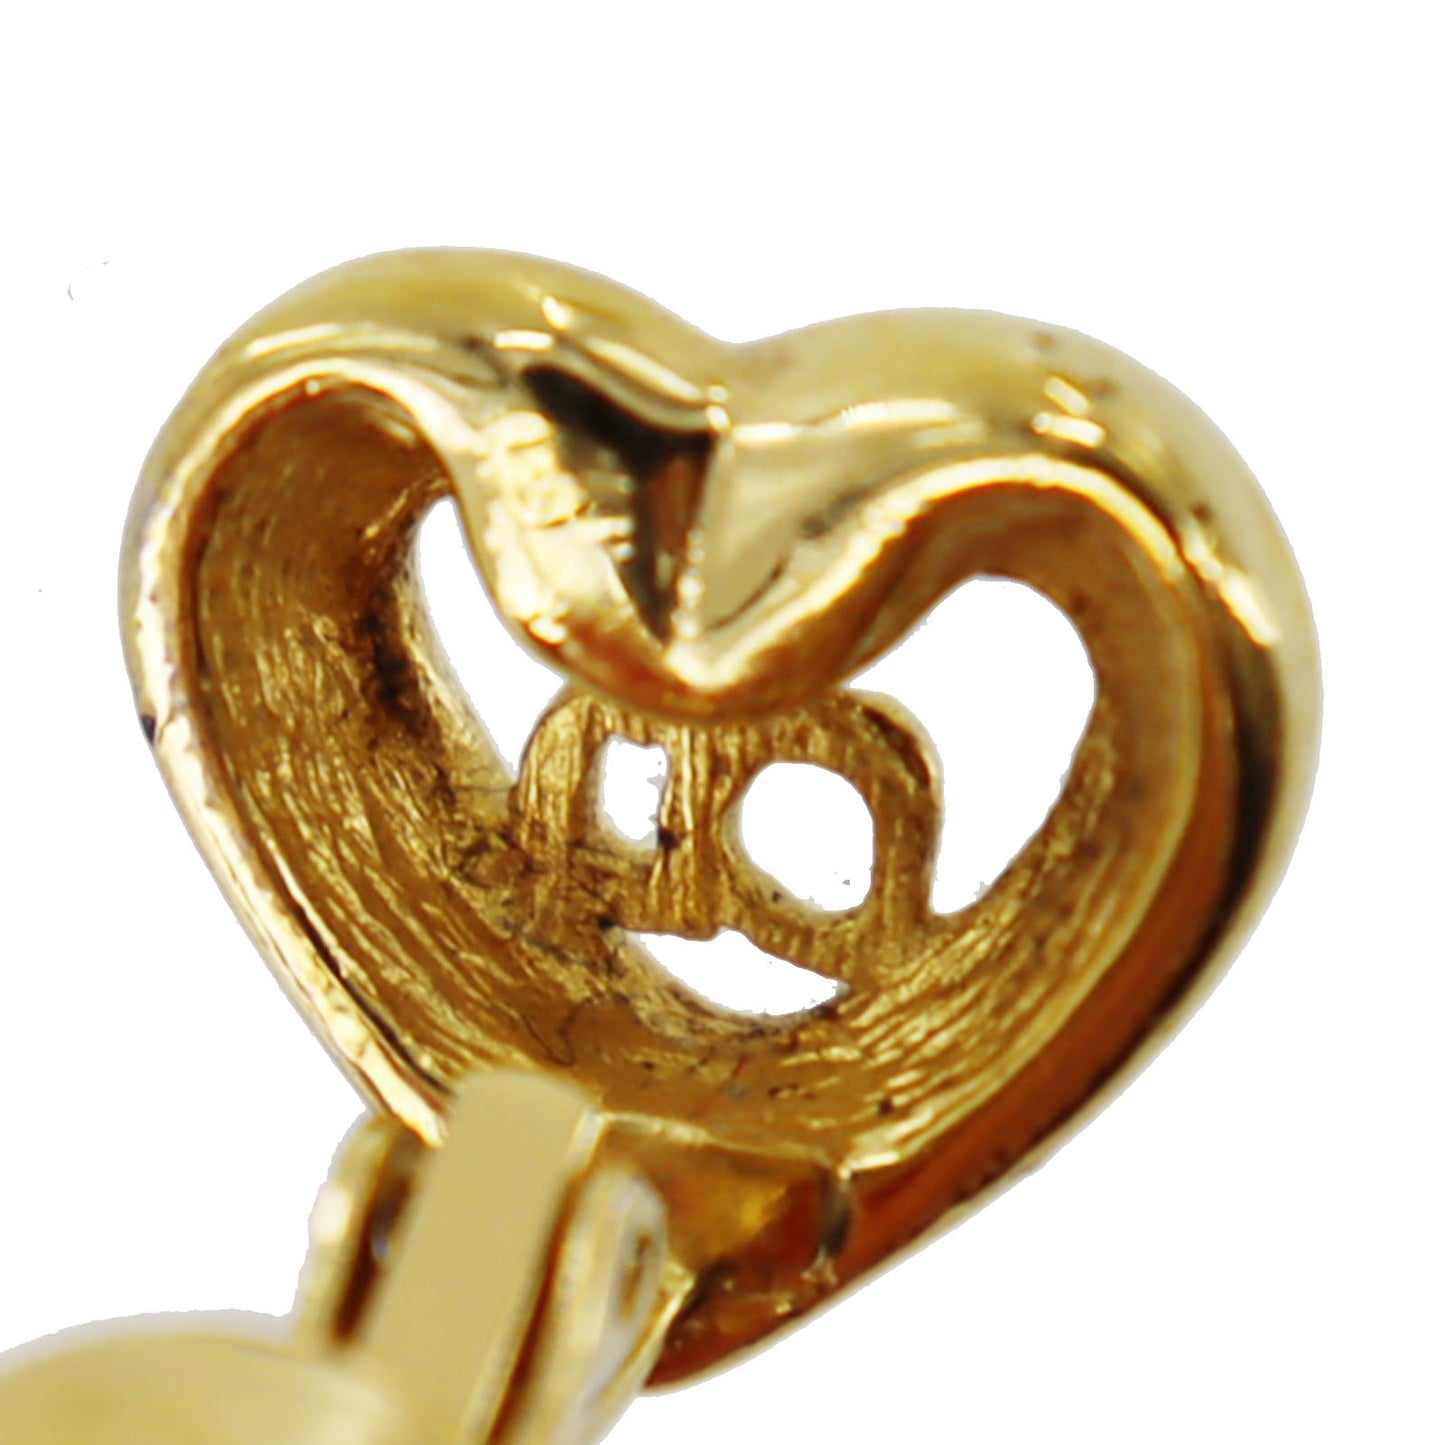 Christian Dior CD Logos Heart Rhinestone Earrings Gold Plated #BO767